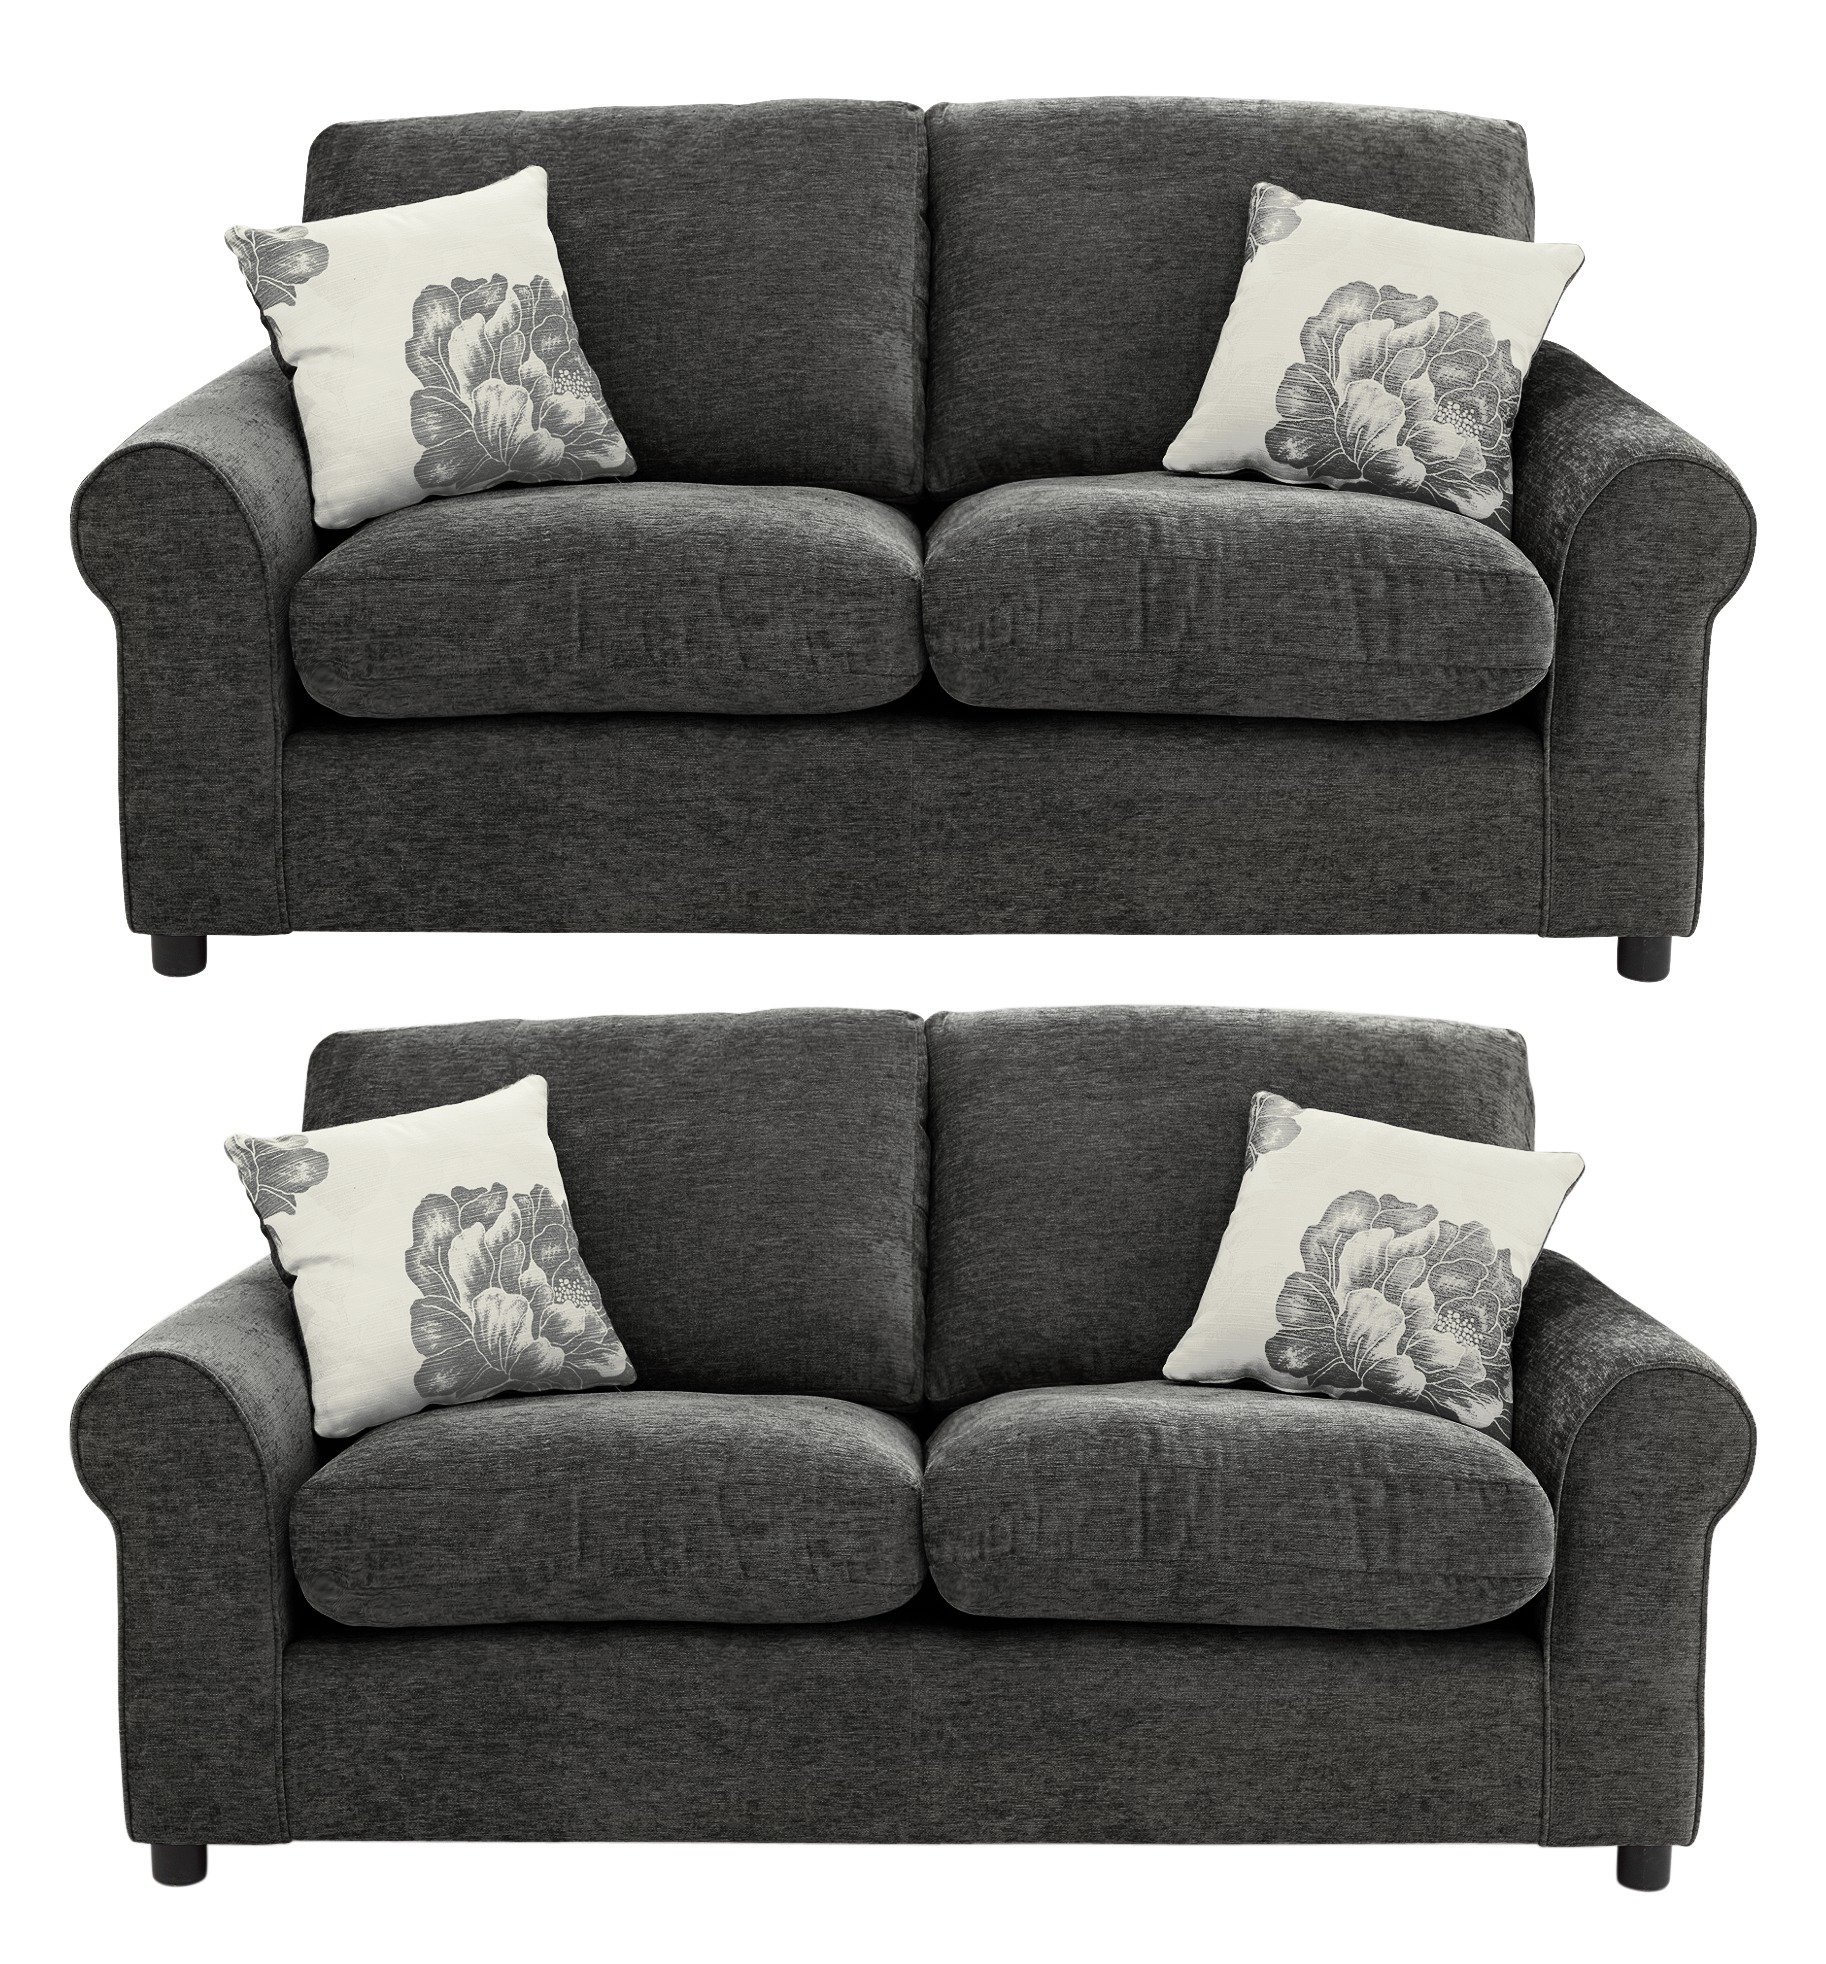 Argos Home Tessa Fabric Pair of Compact 3 Seat Charcoal Sofa